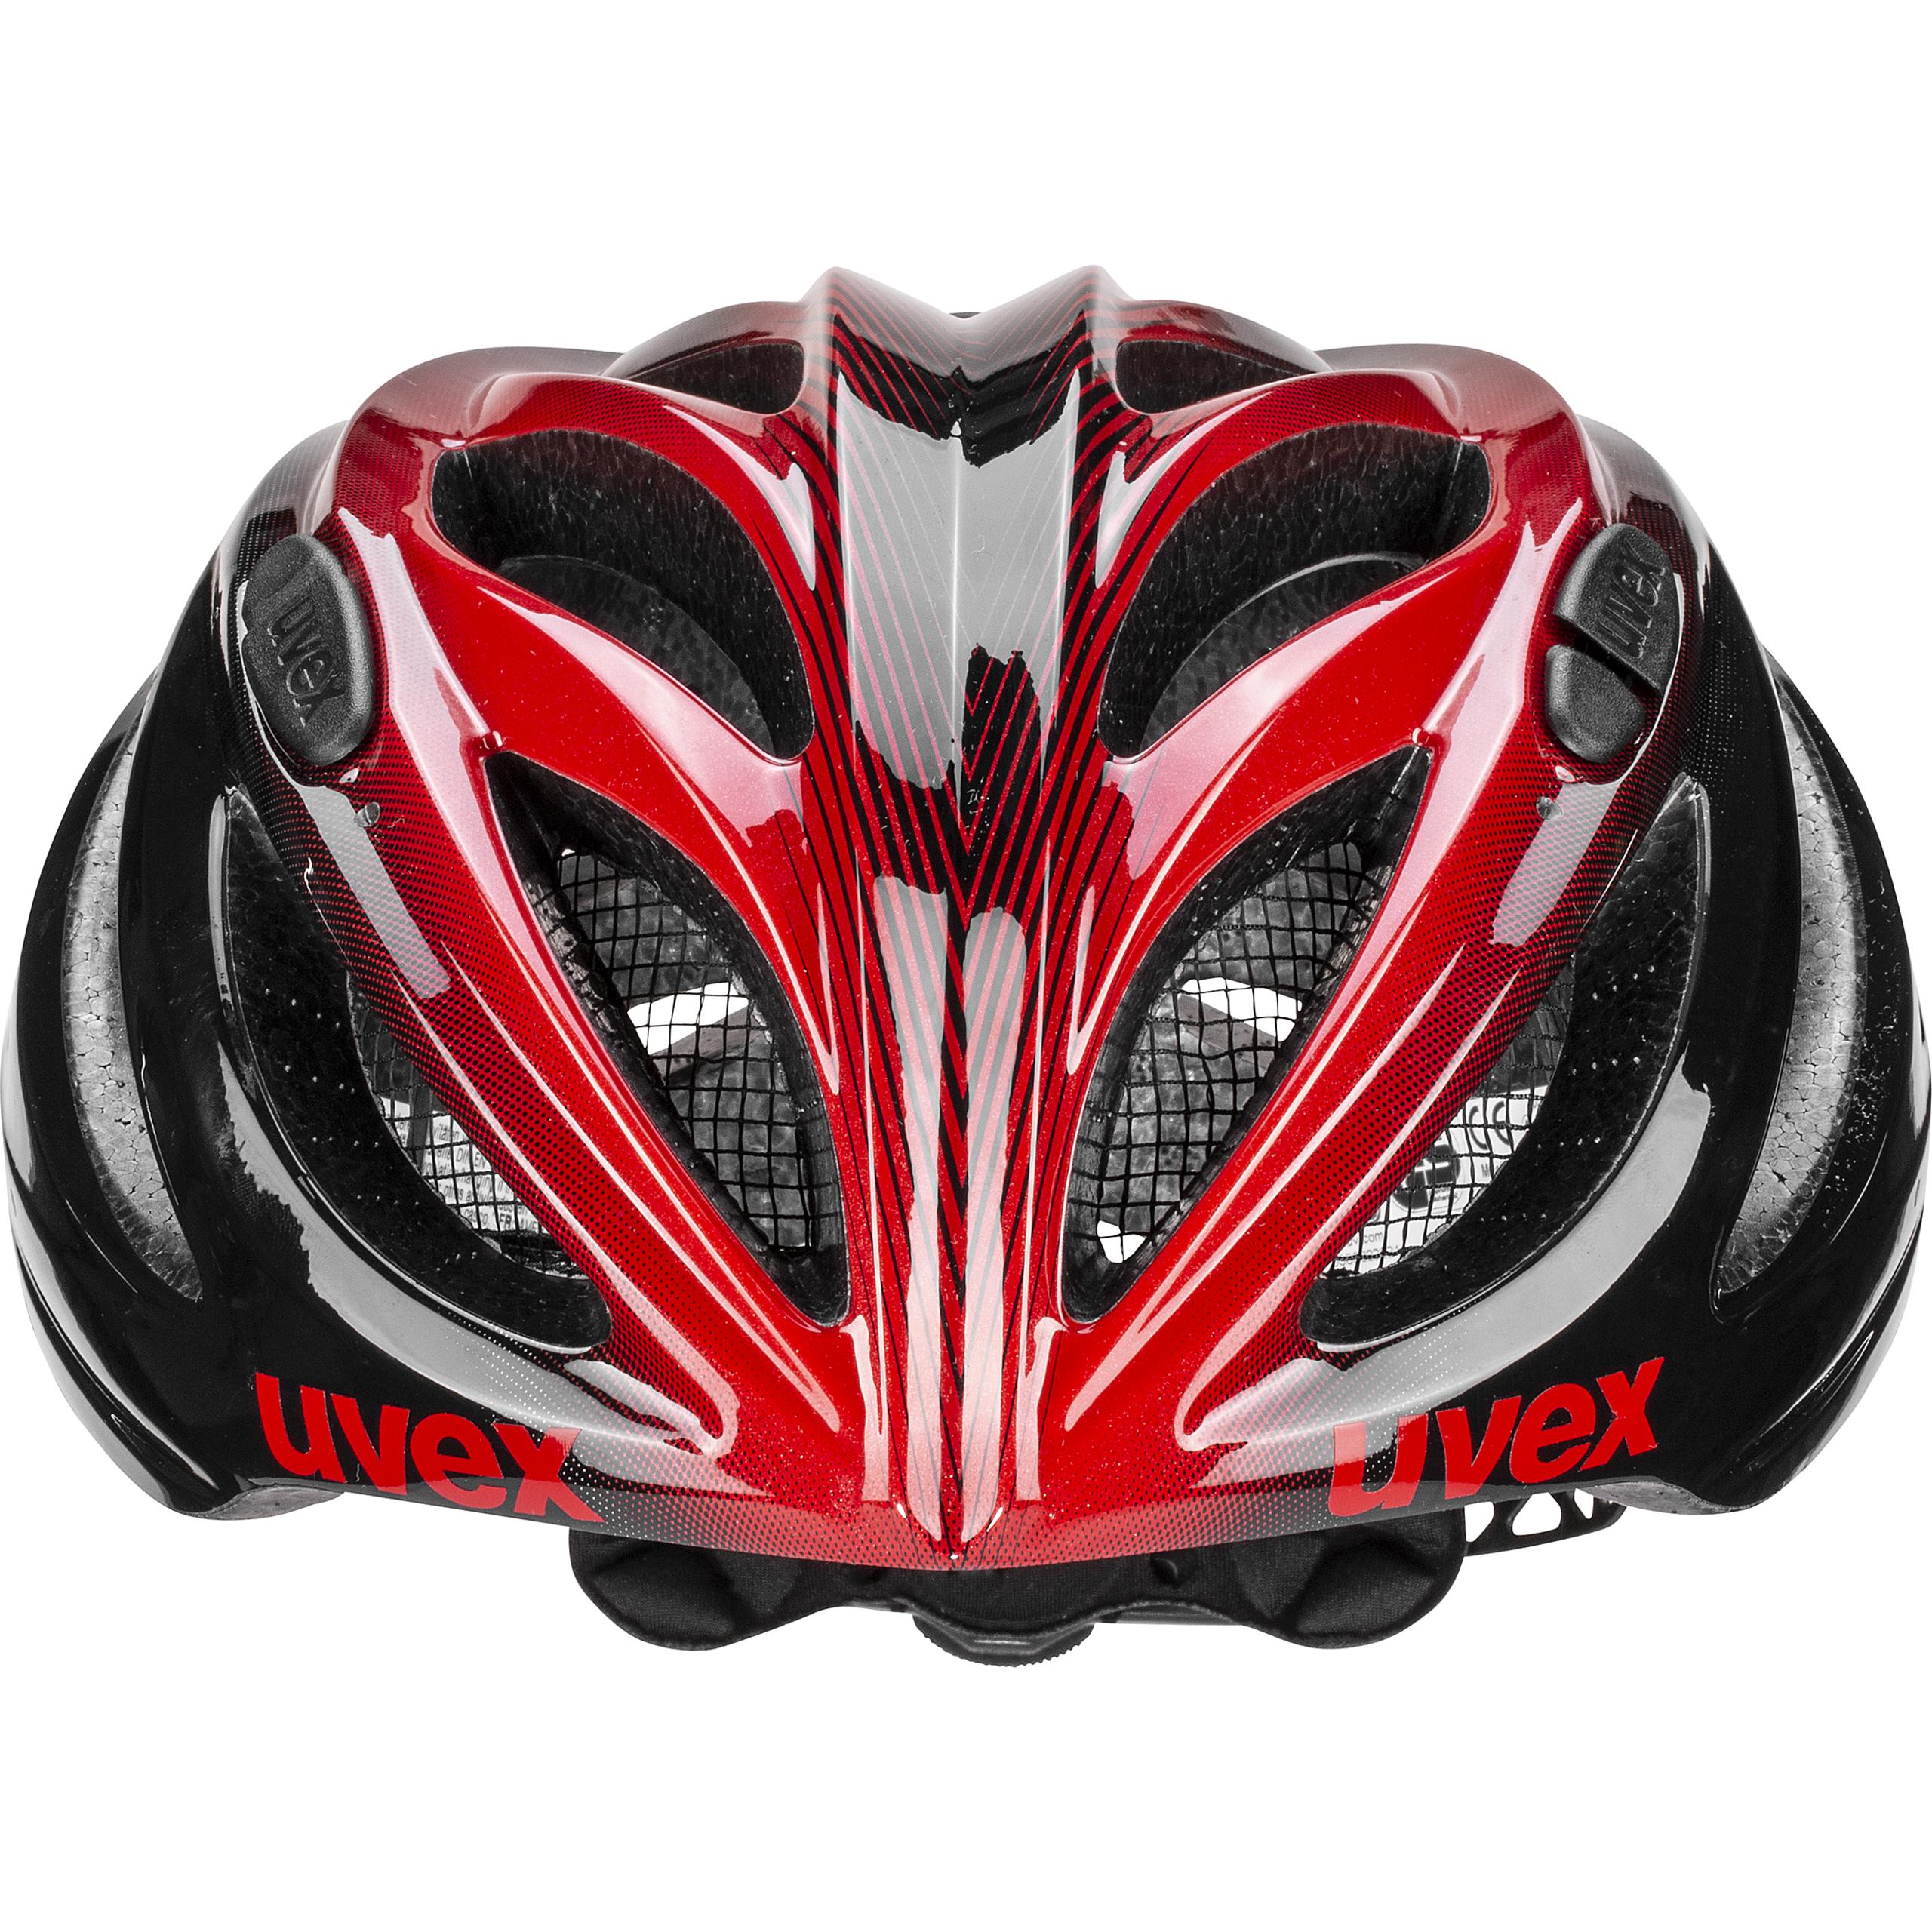 red cycling helmet